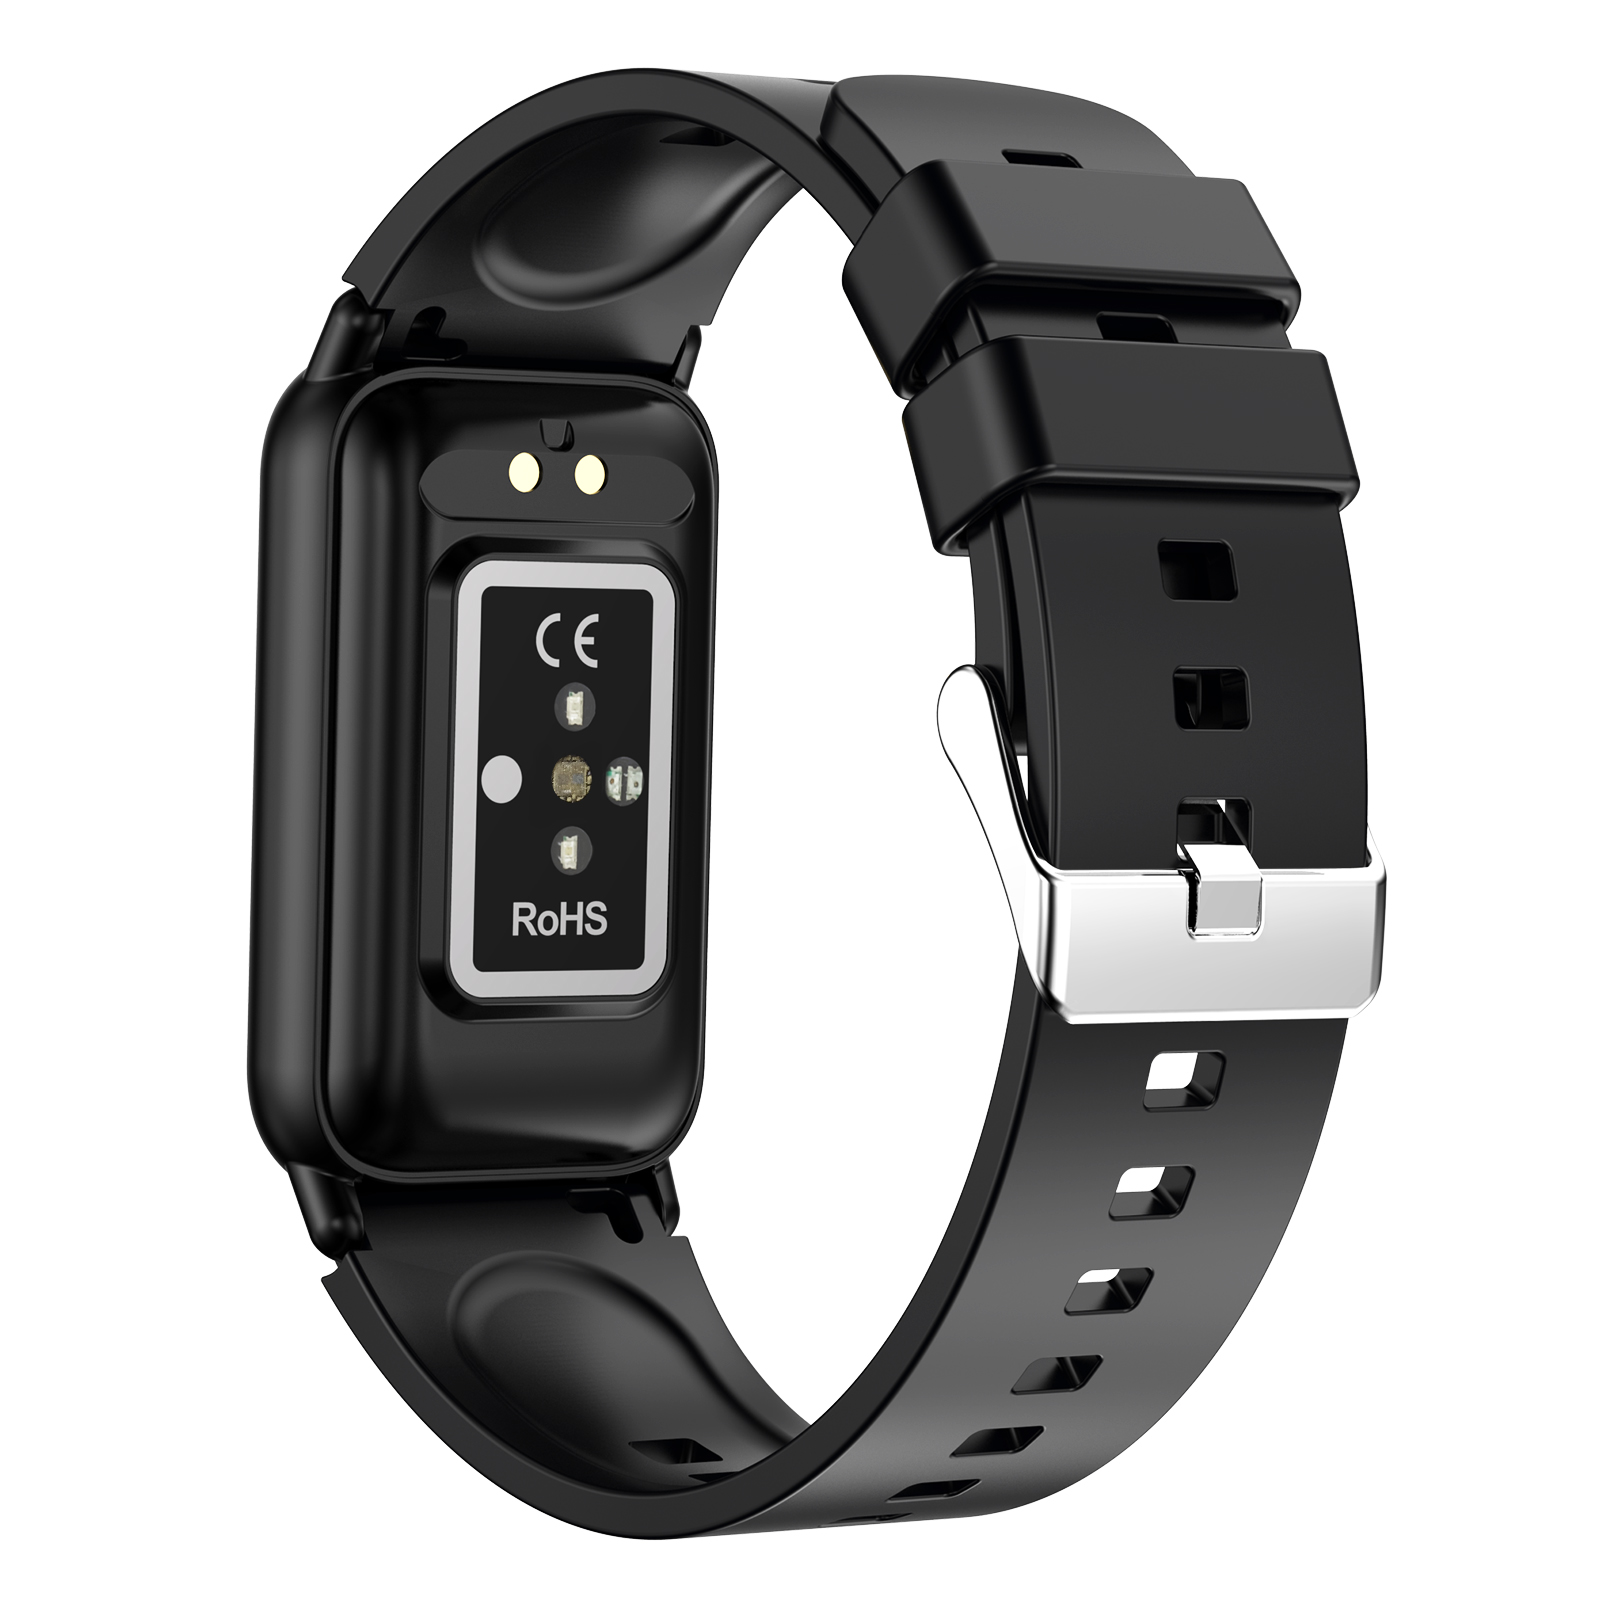 Blood sugar Bluetooth Smart watch with body temperature TK72